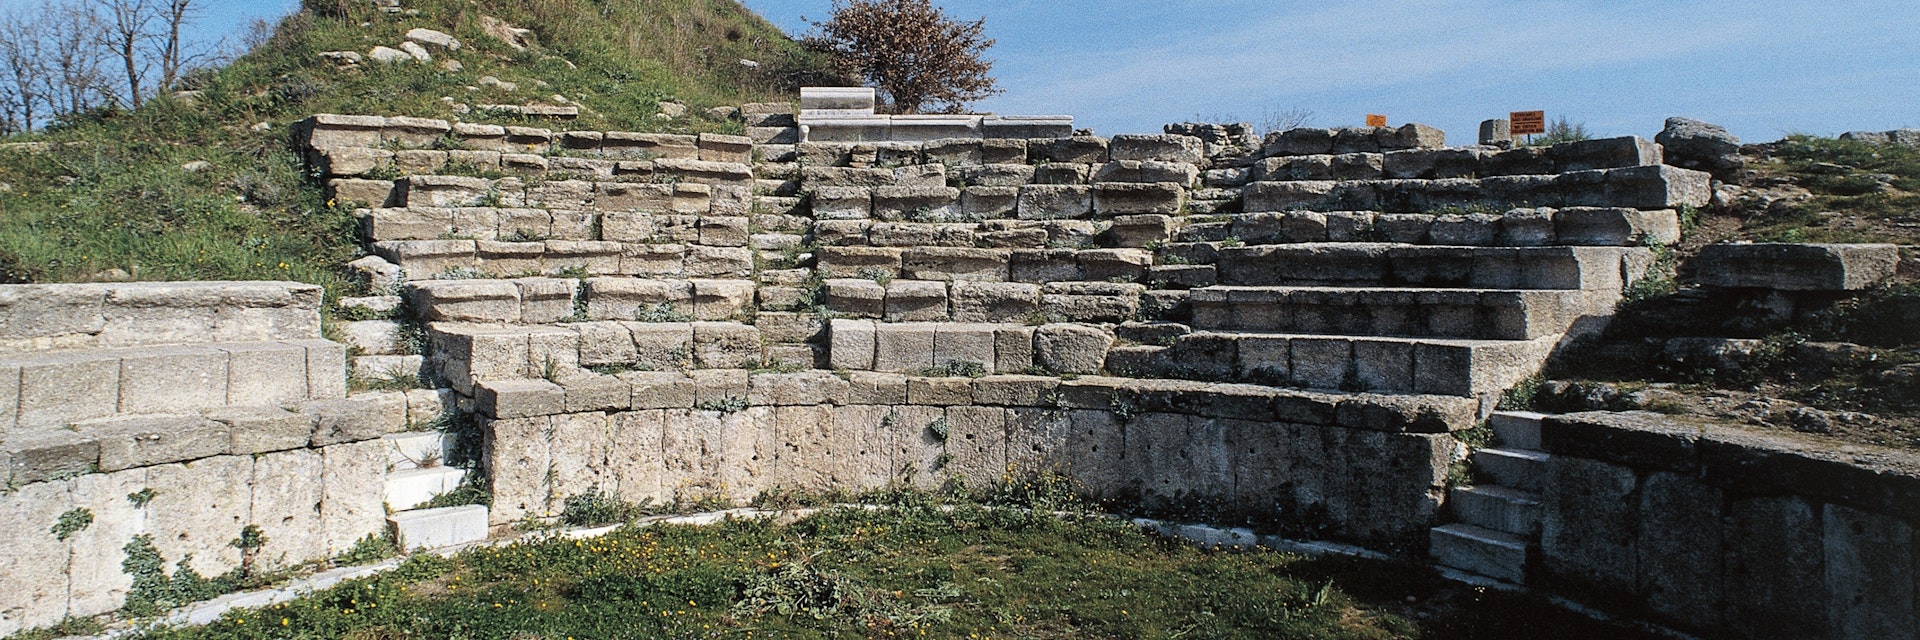 Roman Theatre, Troy IX, Archaeological site of ancient Troy (UNESCO World Heritage List, 1998), Hisarlik, Turkey